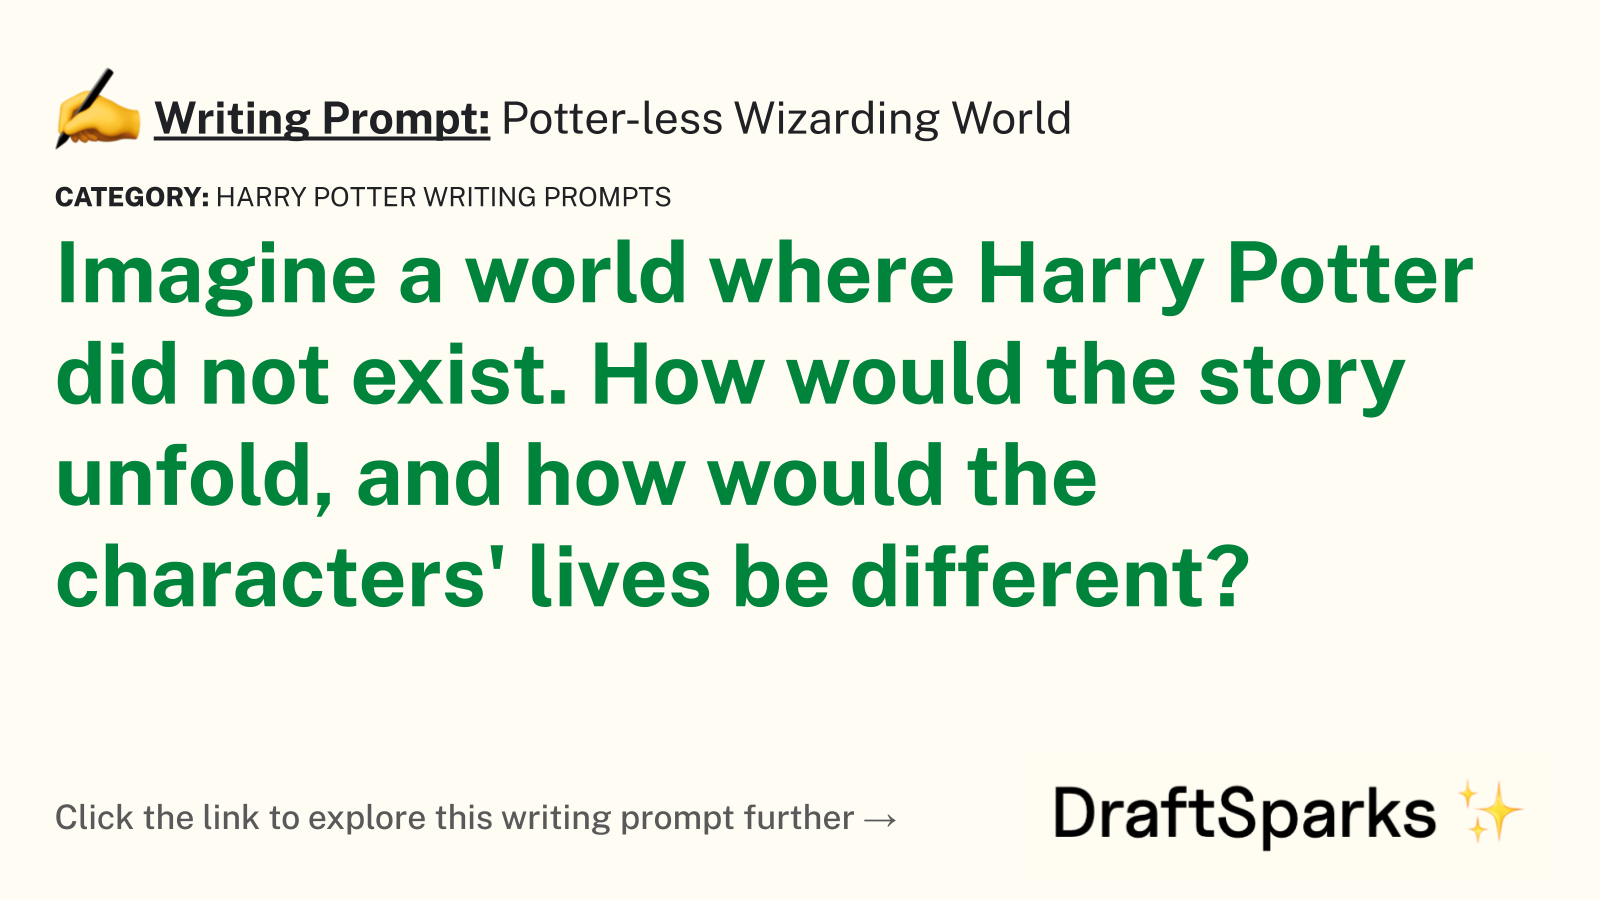 Potter-less Wizarding World